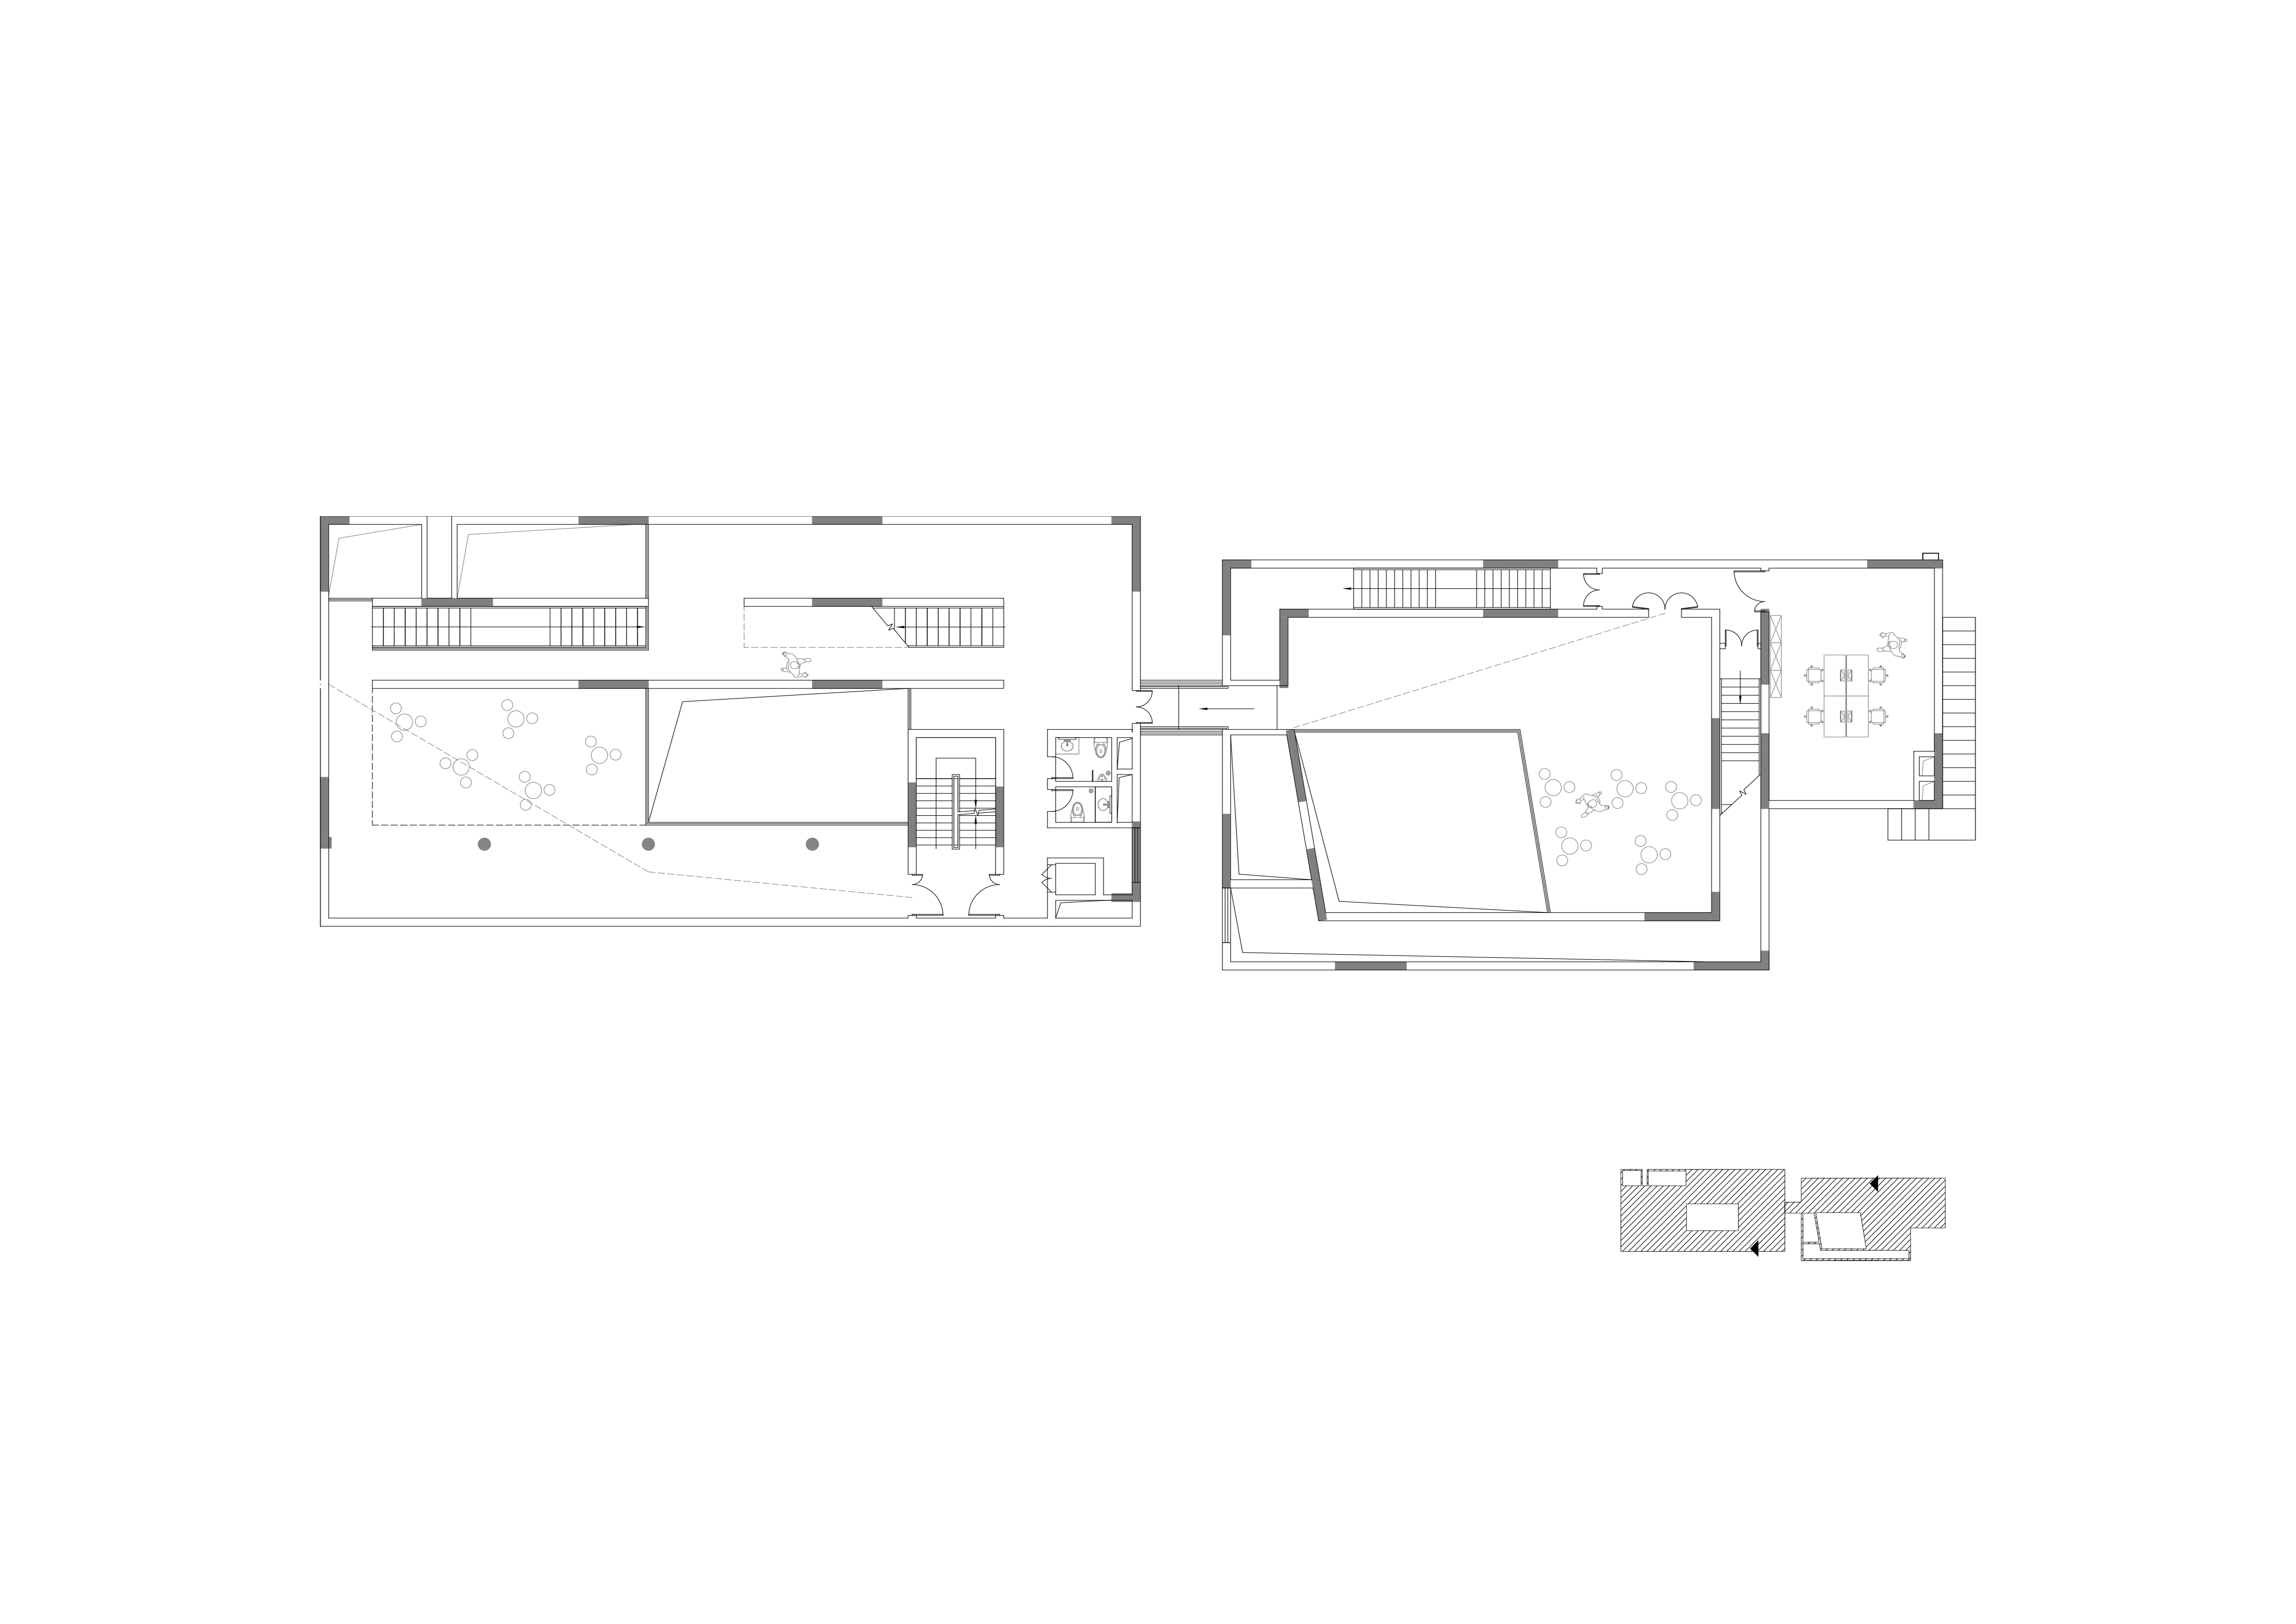 02 - First Floor Plan.jpg